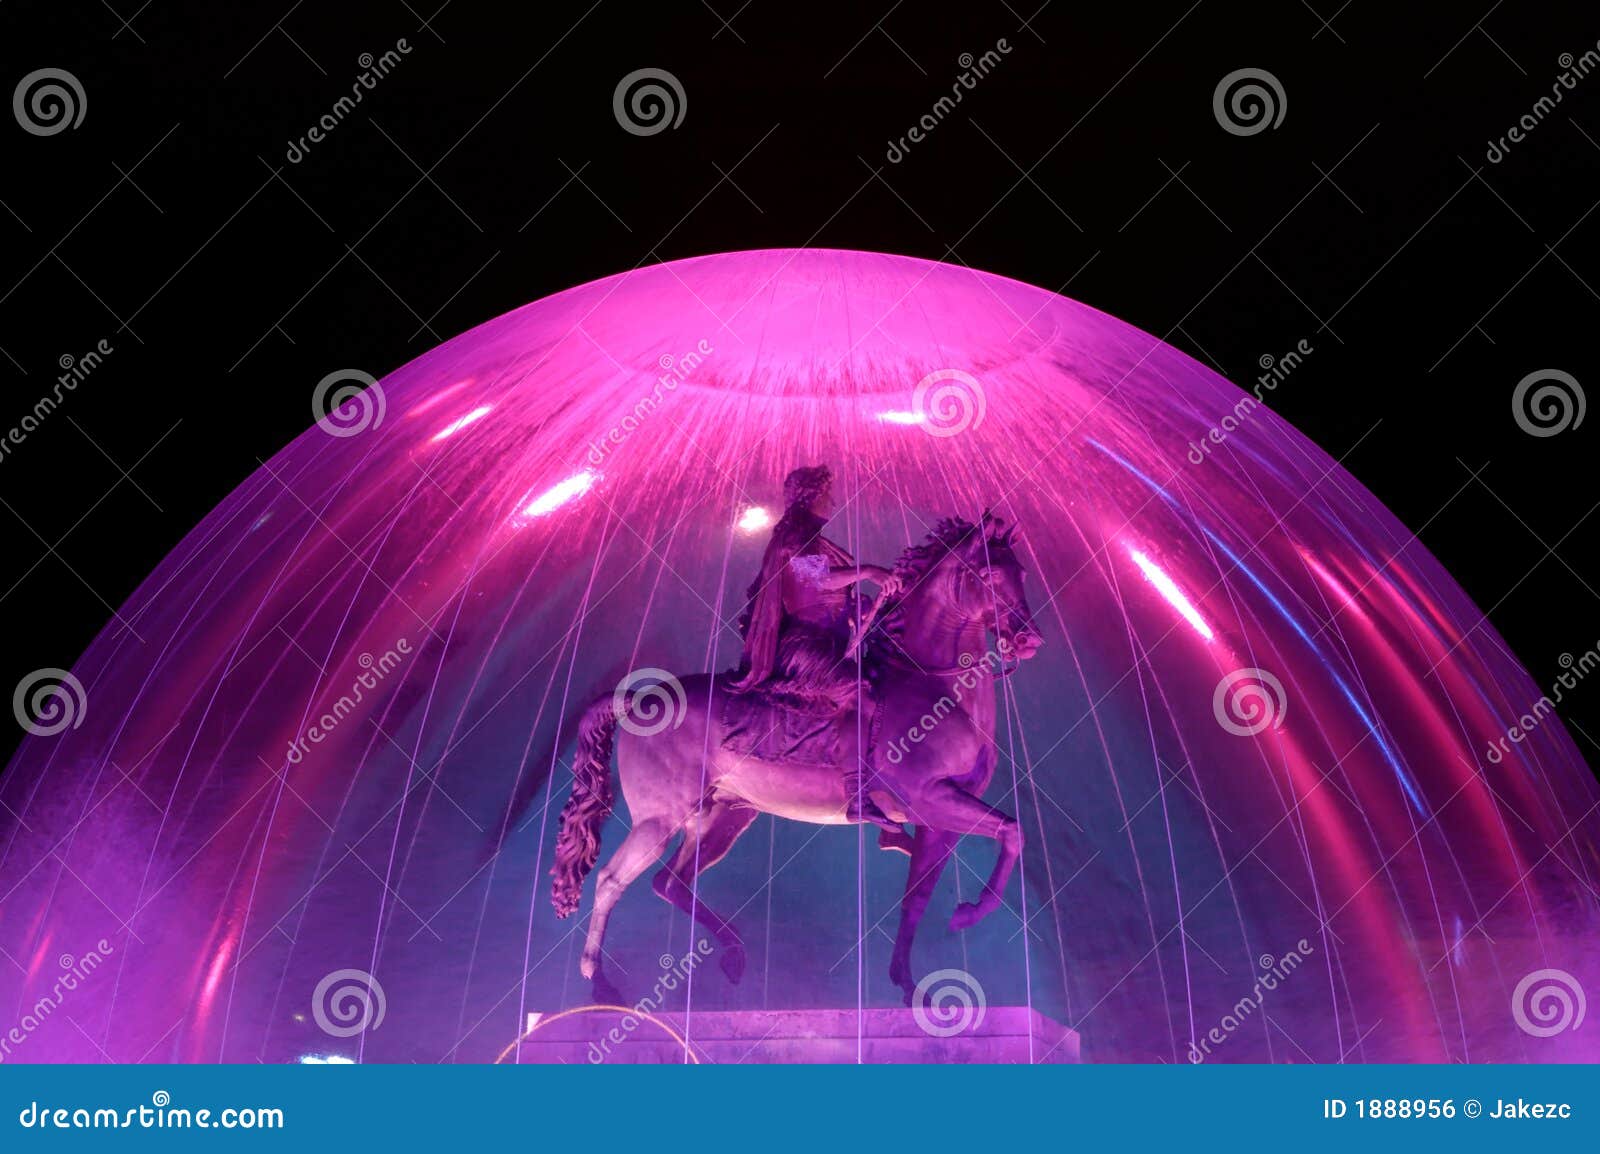 equestrian statue of king louis xiv